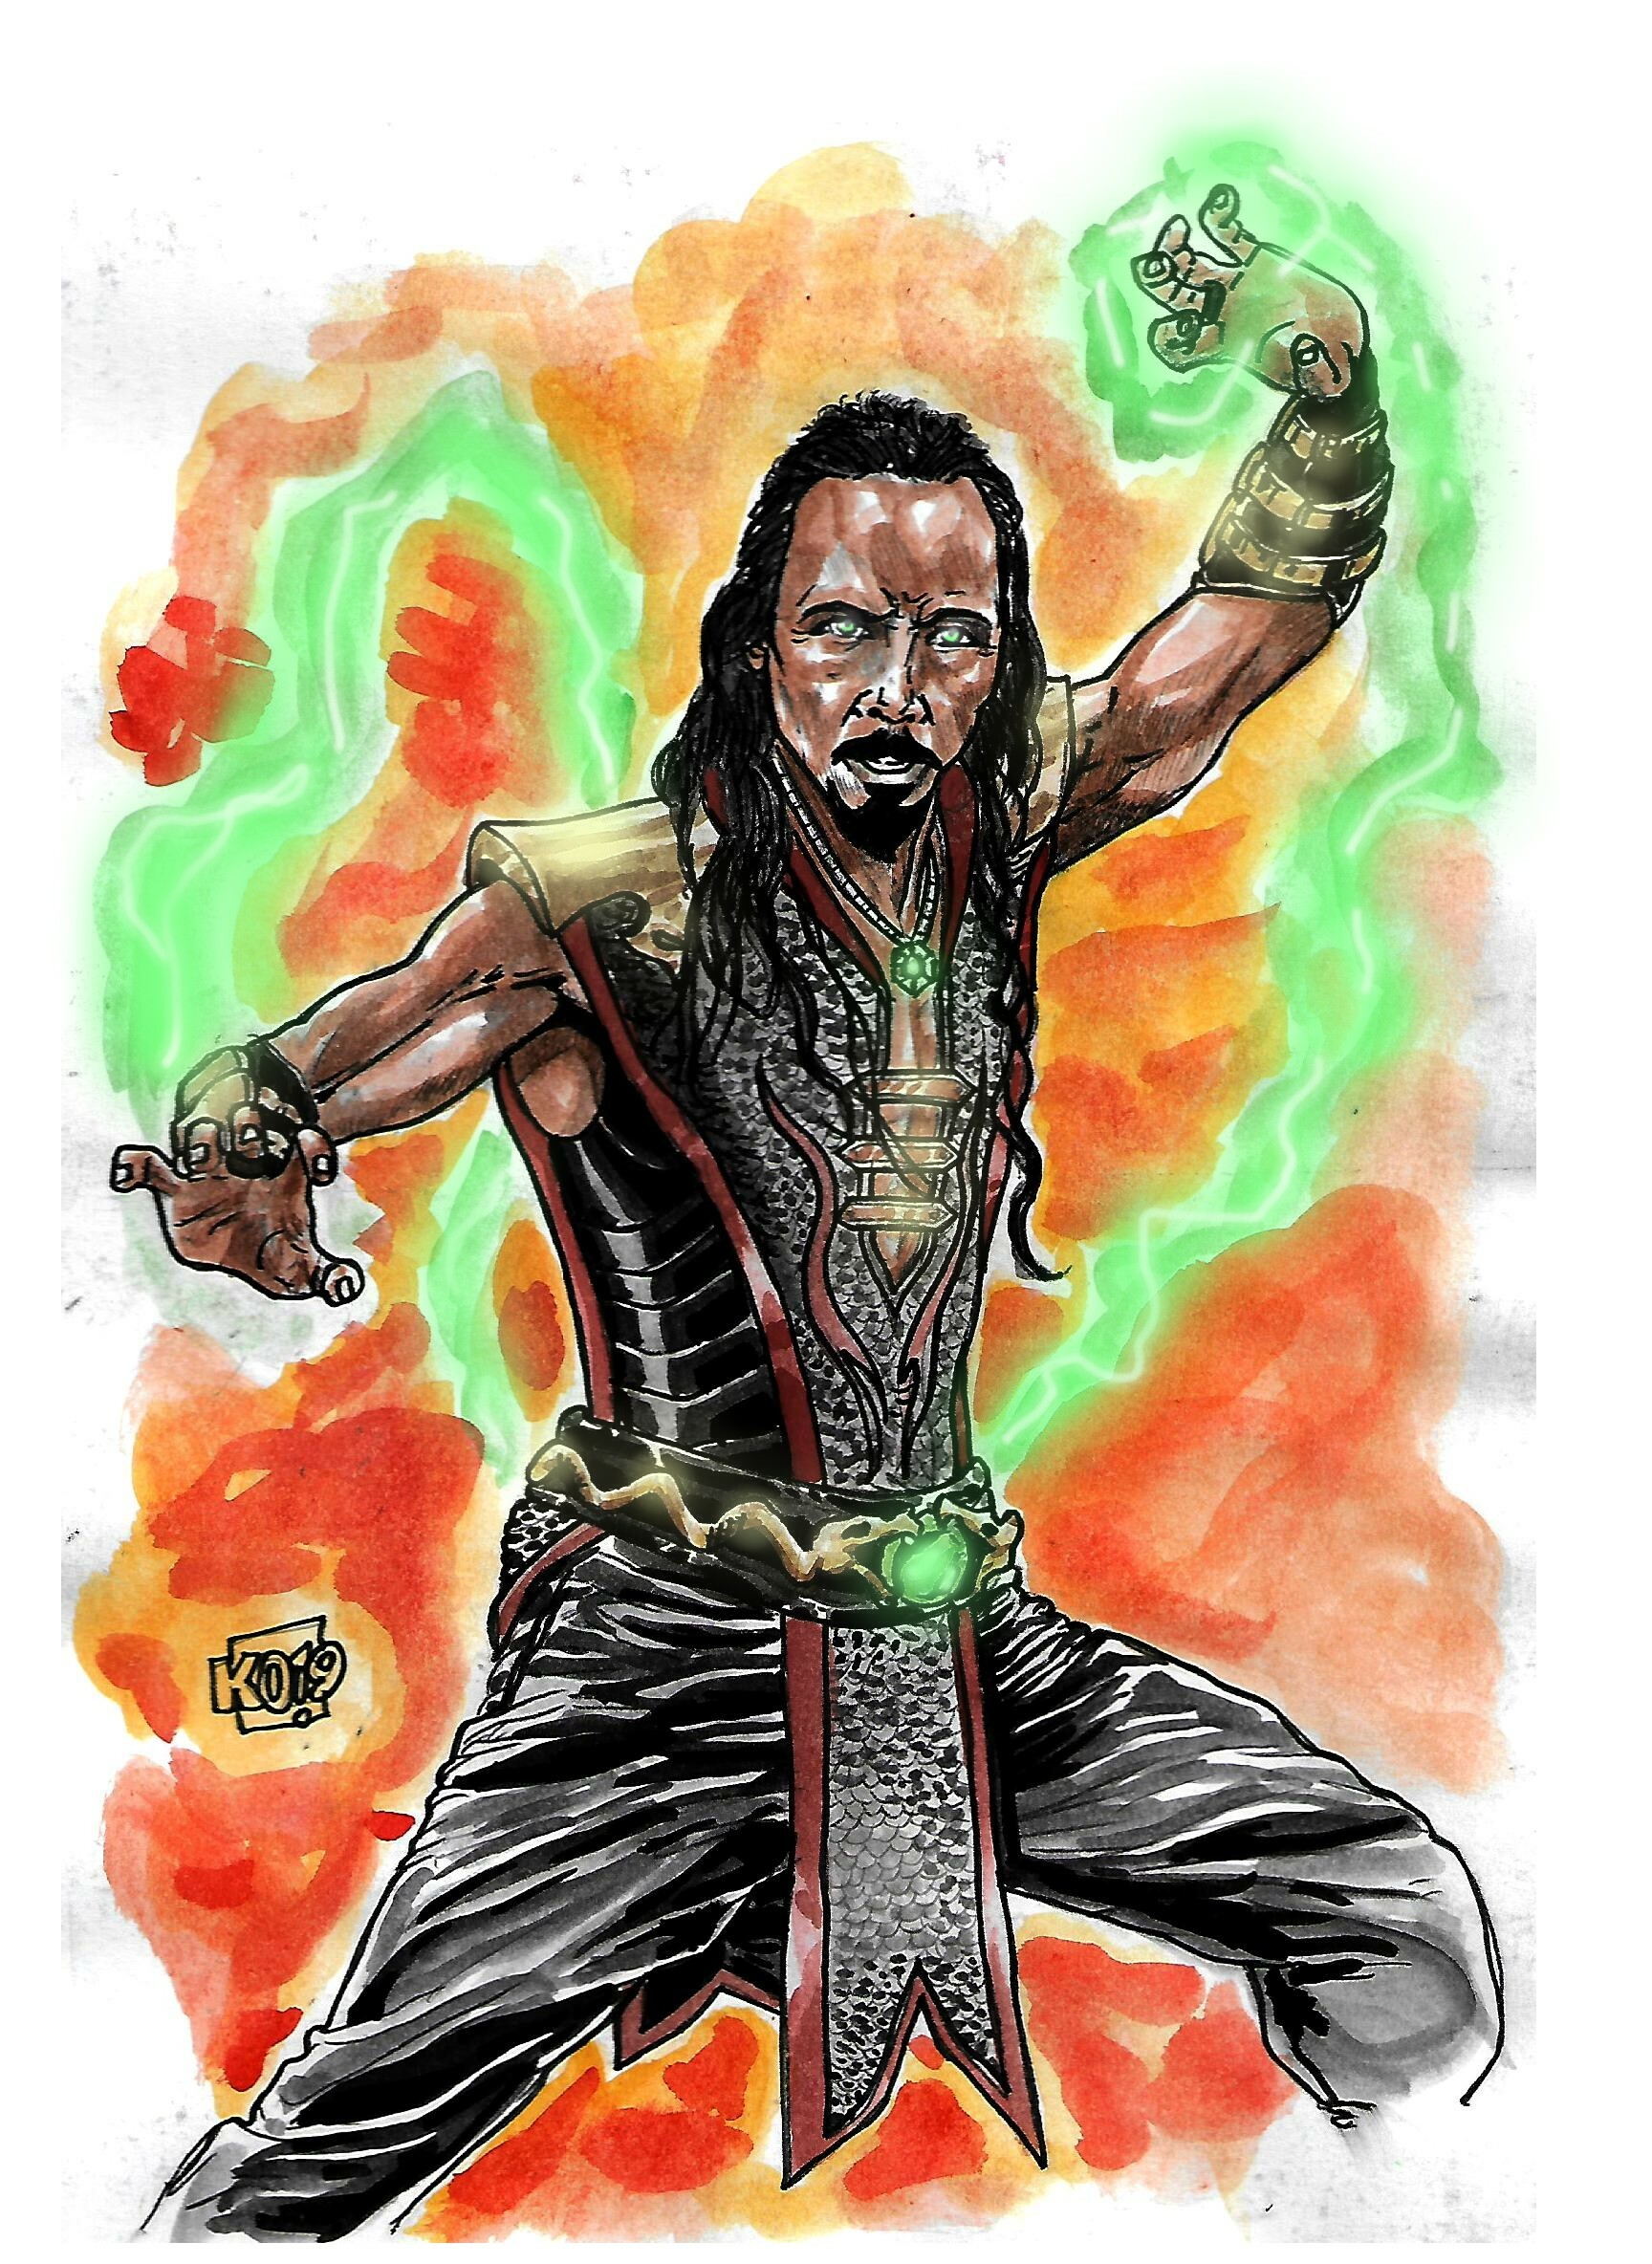 Shang Tsung from Mortal Kombat - AI Generated Artwork - NightCafe Creator